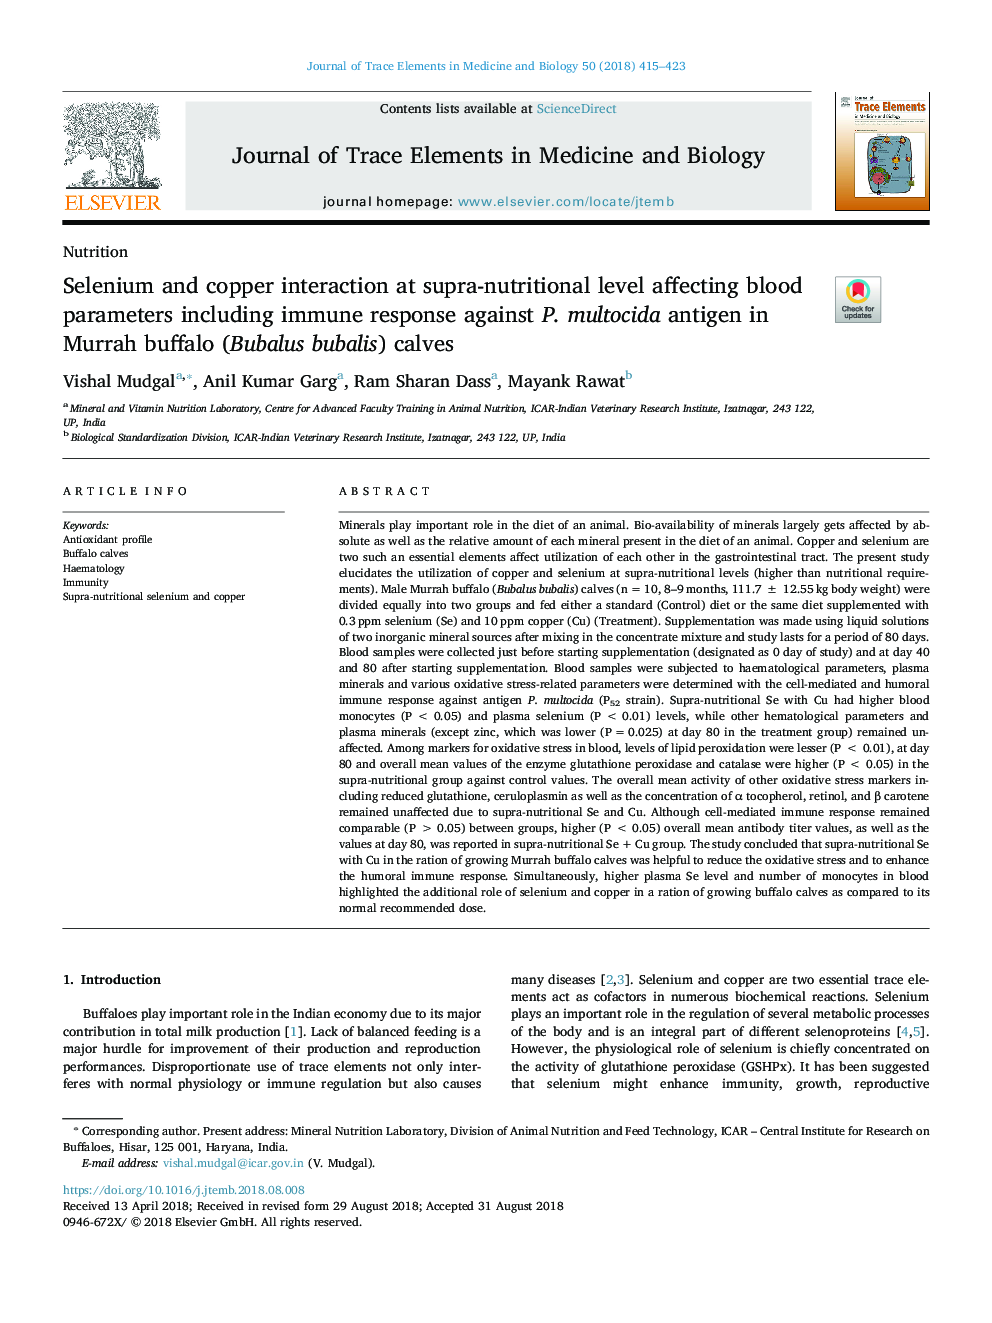 Selenium and copper interaction at supra-nutritional level affecting blood parameters including immune response against P. multocida antigen in Murrah buffalo (Bubalus bubalis) calves